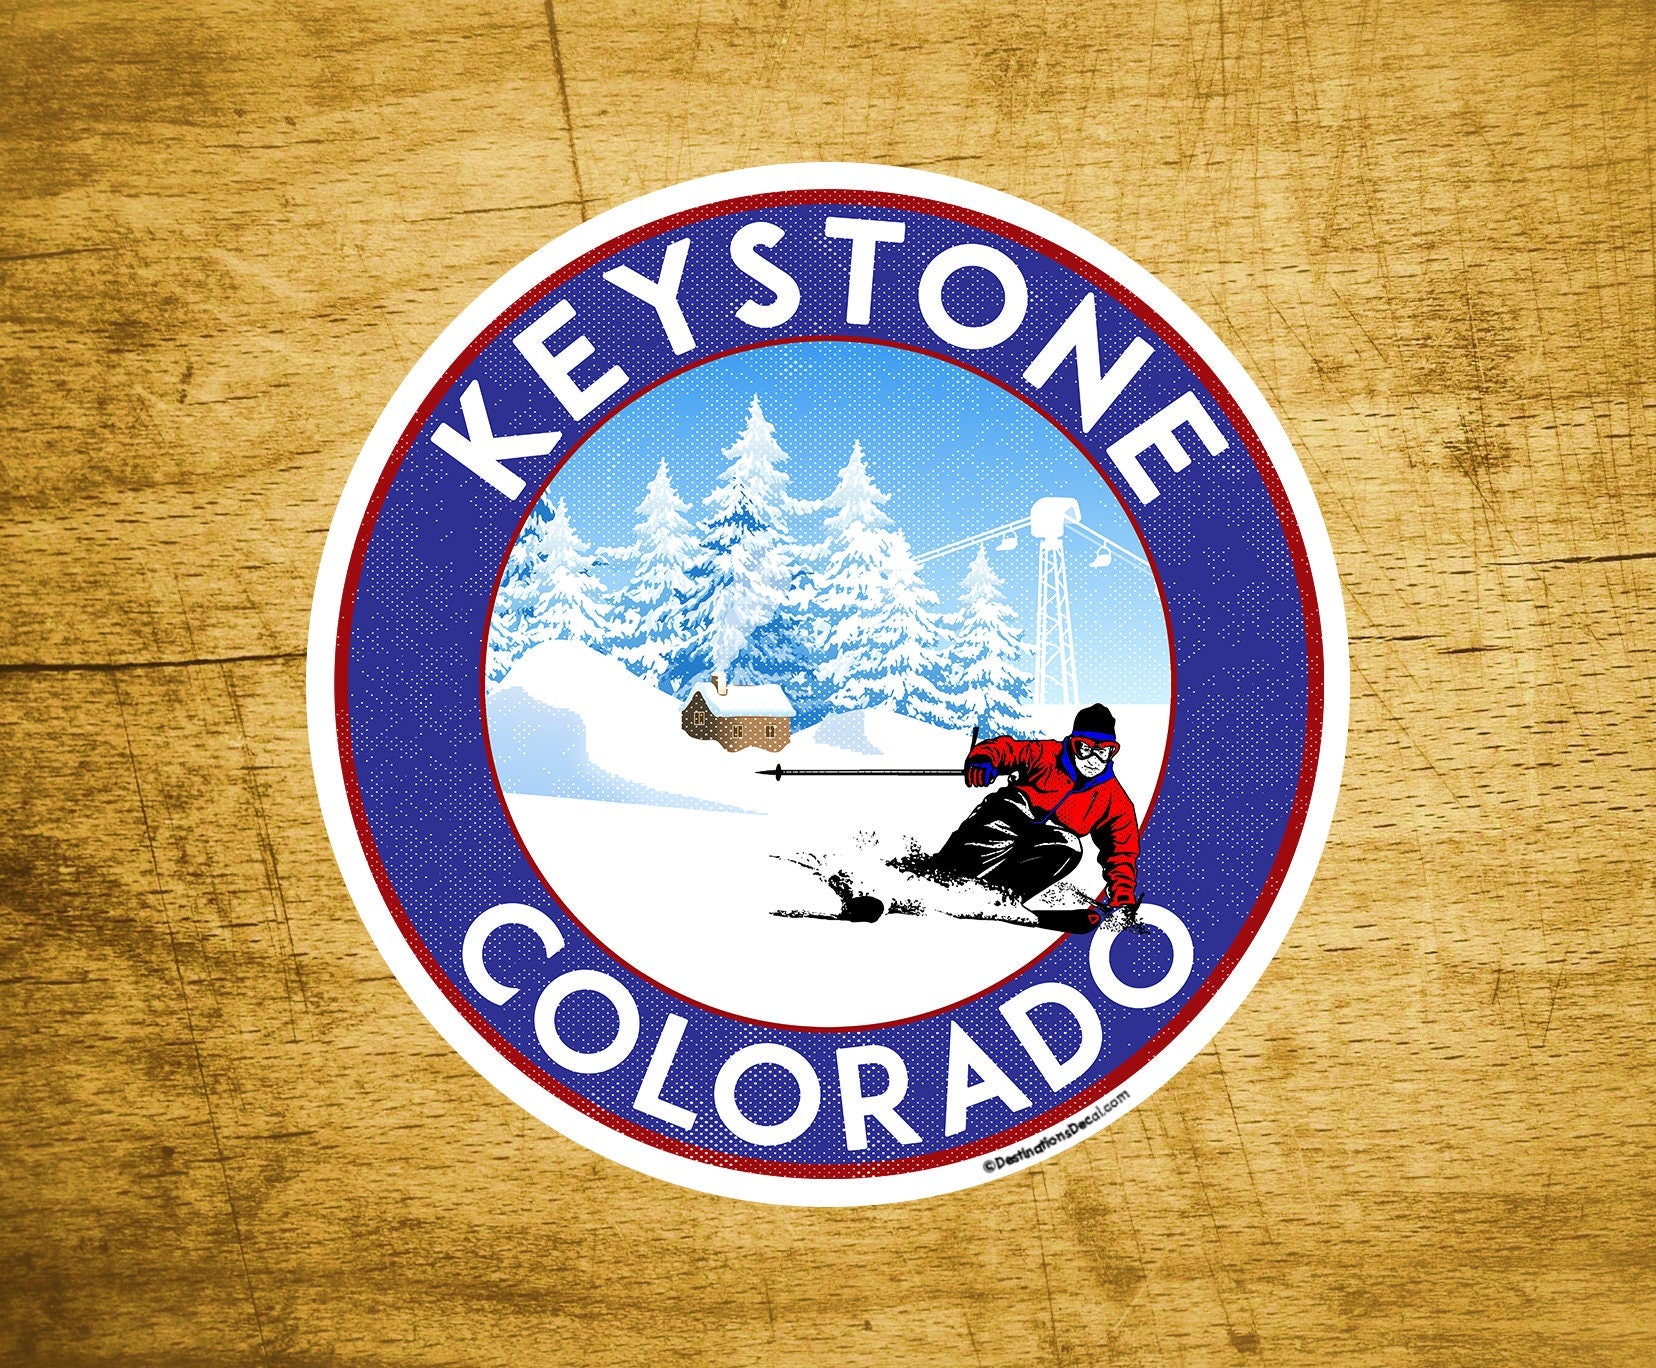 Skiing Keystone Colorado Sticker Decal 3" x 3" Snowboarding